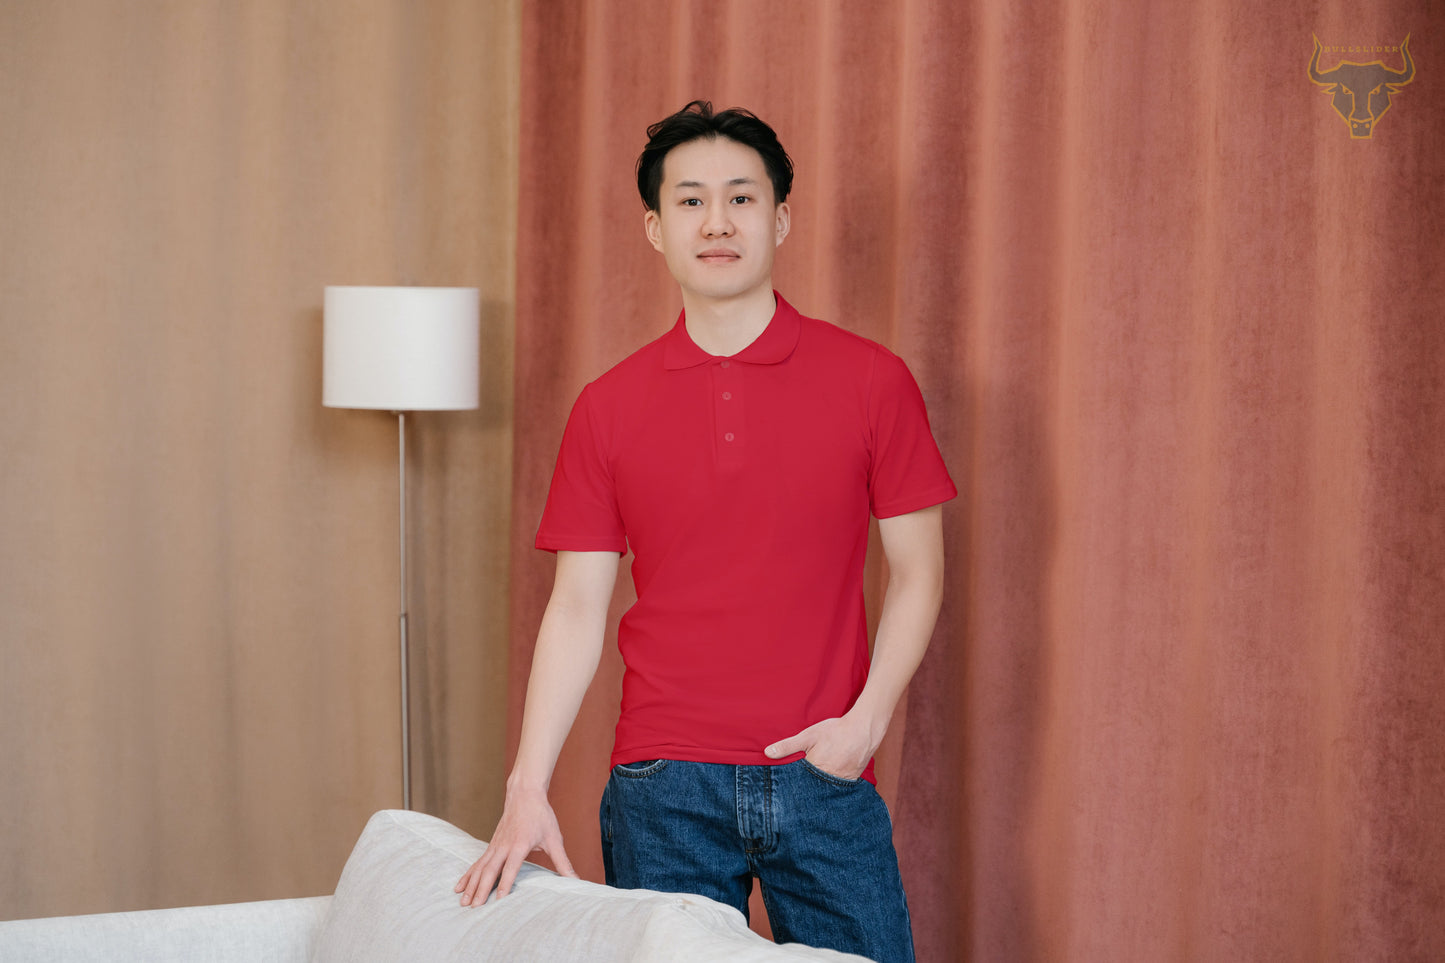 Men's Plain Red Polo T-Shirt